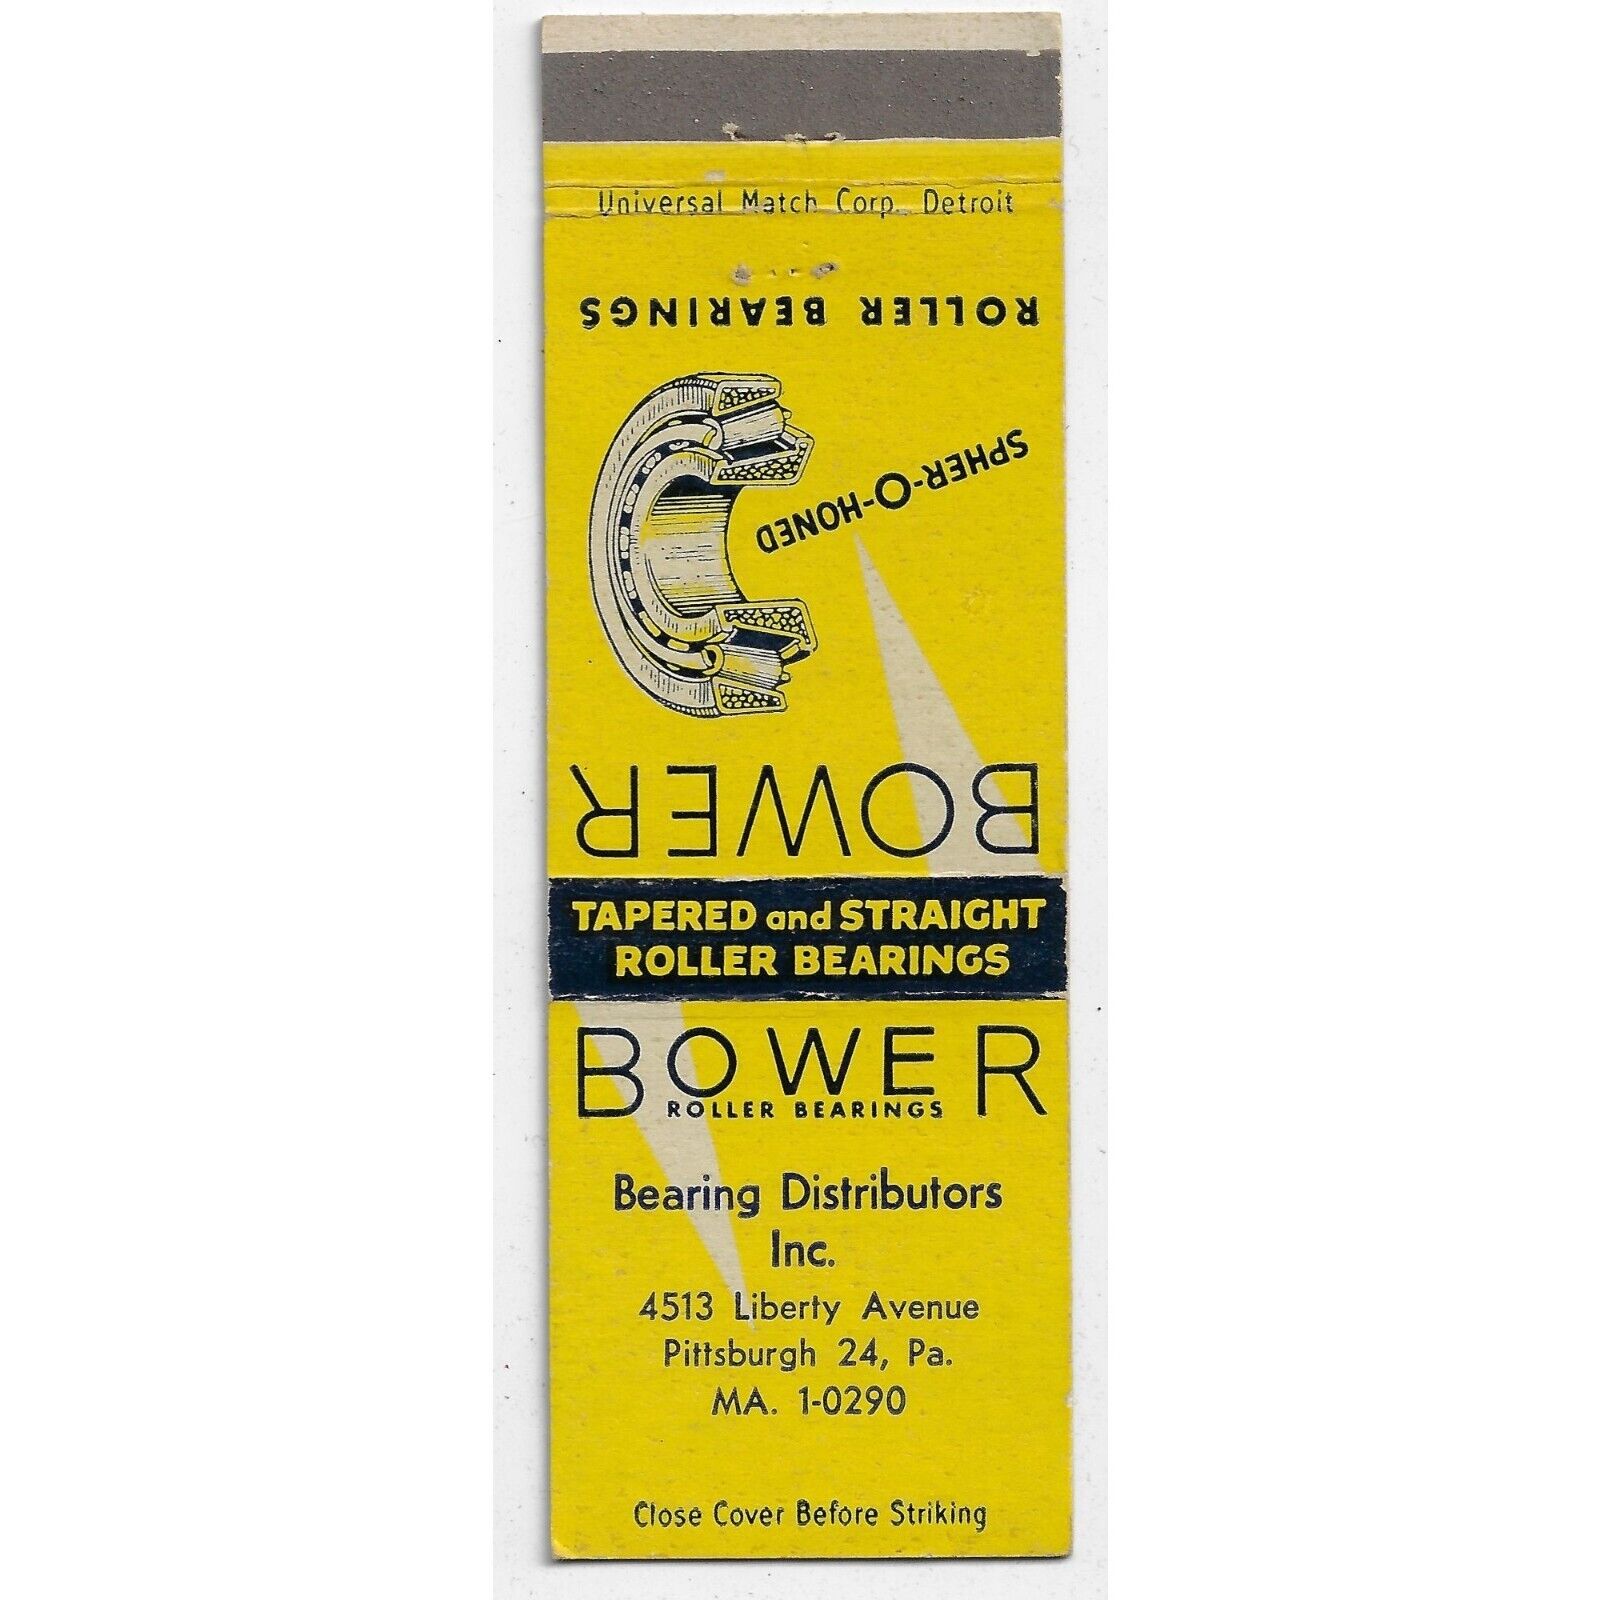 Bearing Distributors Pittsburgh 24 PA FS Empty Matchbook Cover Bower Bearings